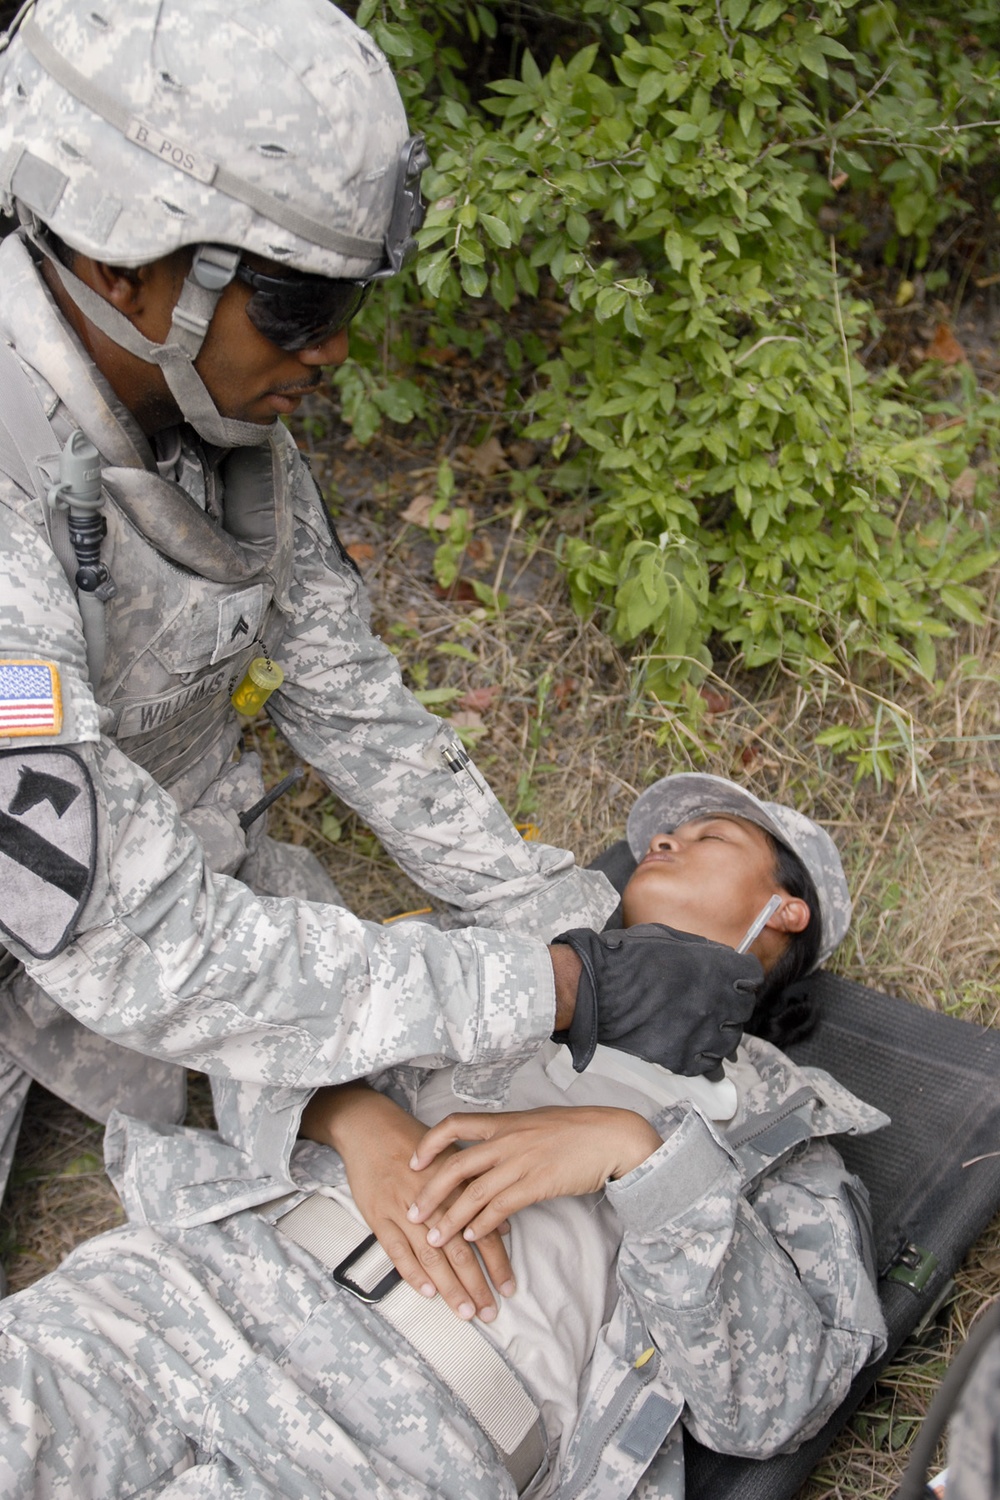 Blacksmiths train-up on combat medical care